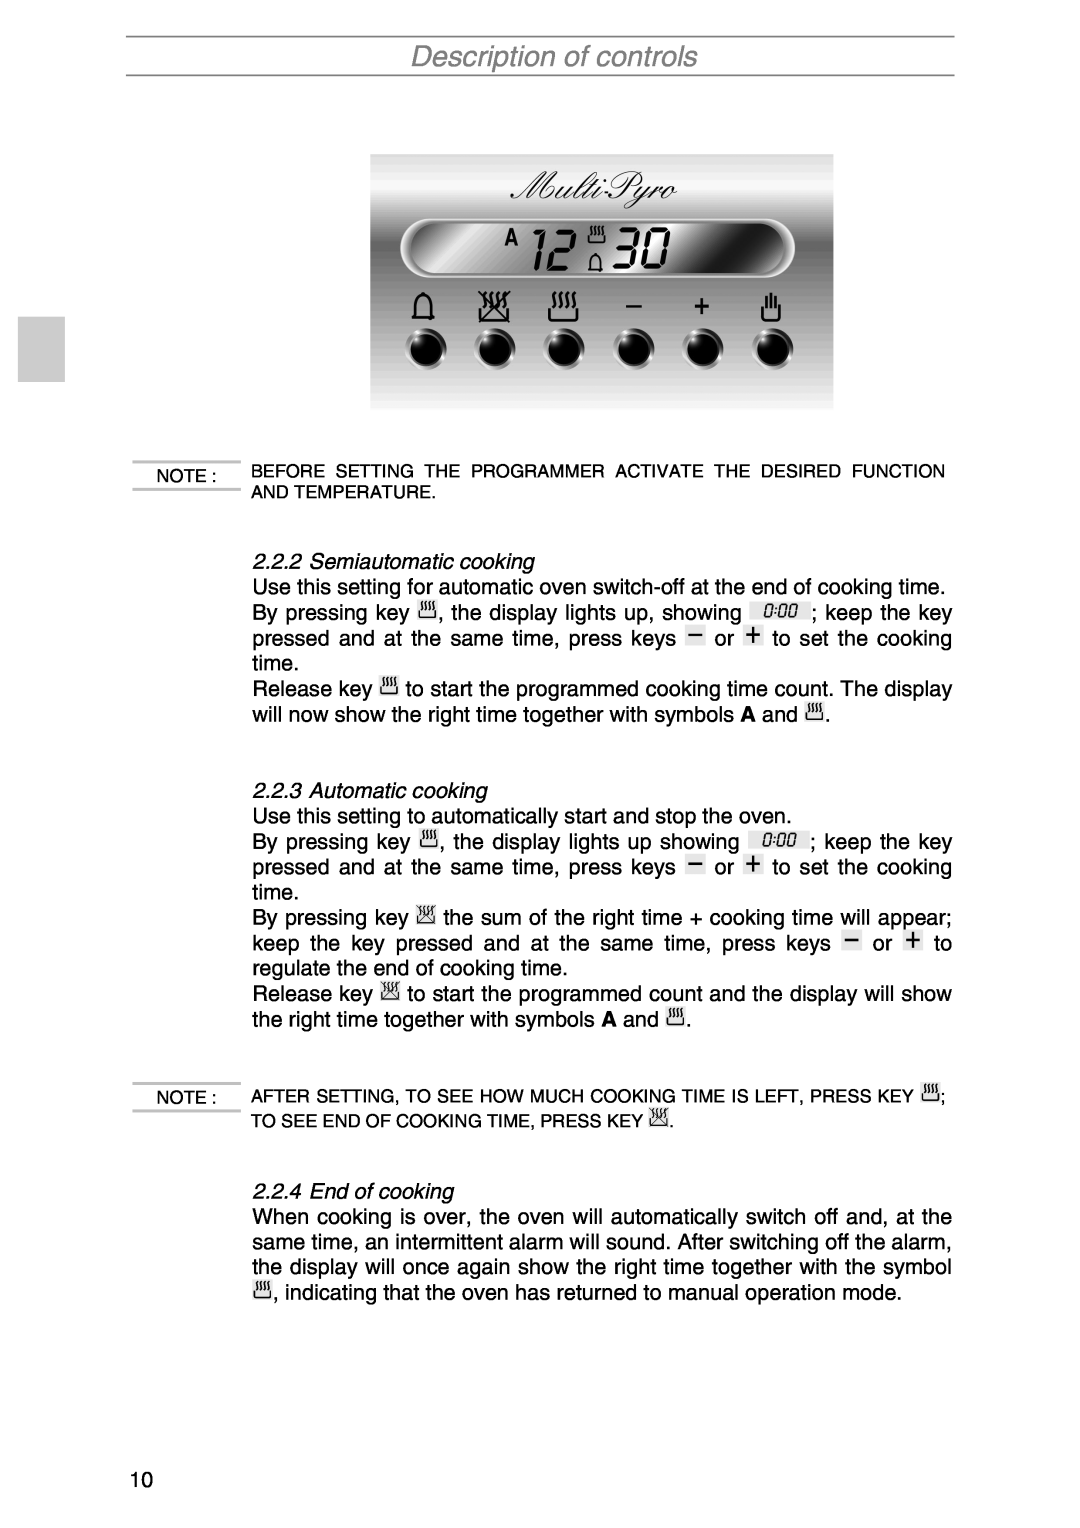 Smeg SIL290X manual Description of controls, Semiautomatic cooking, Automatic cooking, End of cooking 